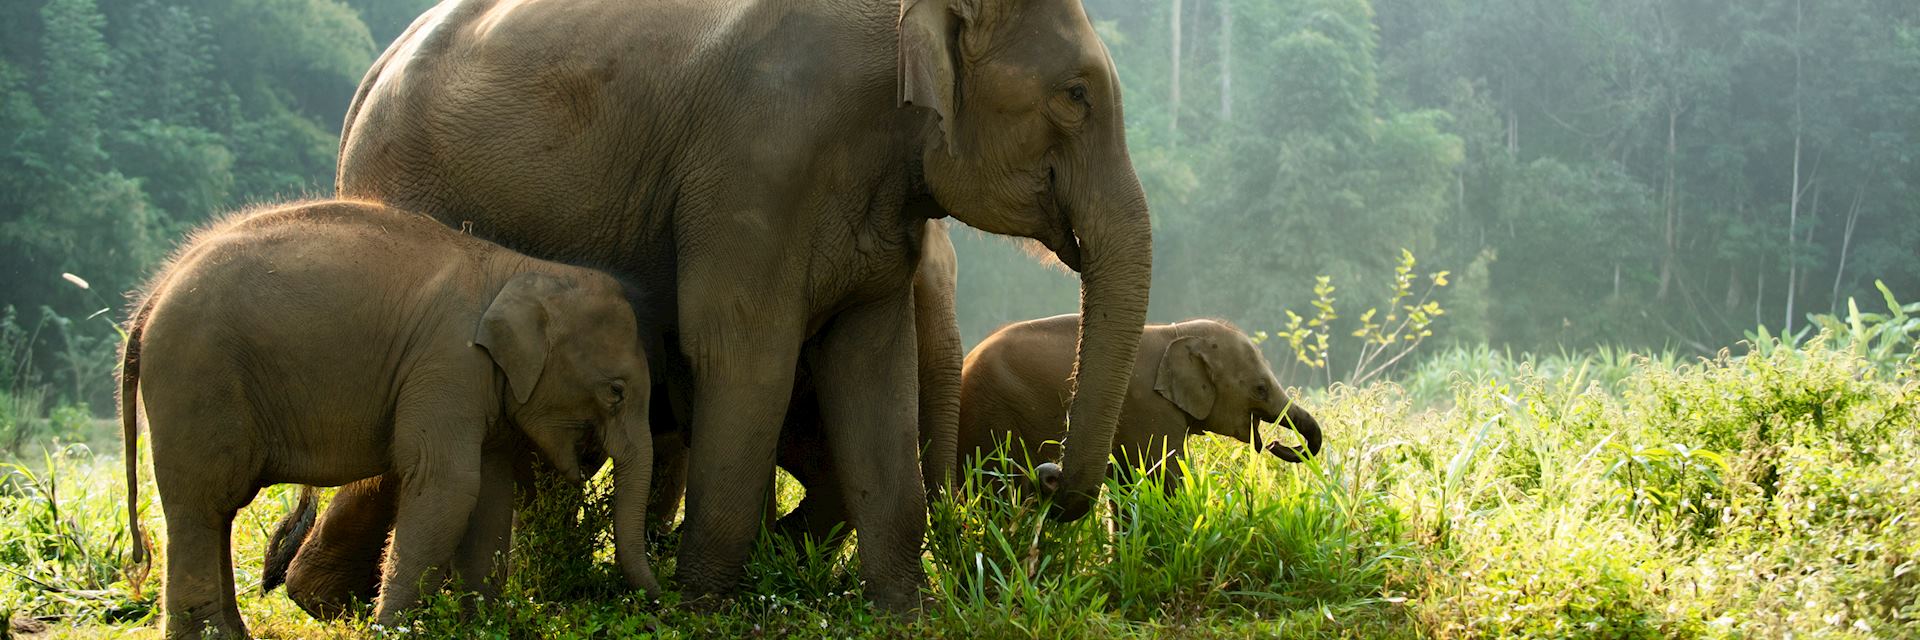 Wild elephant in Vietnam